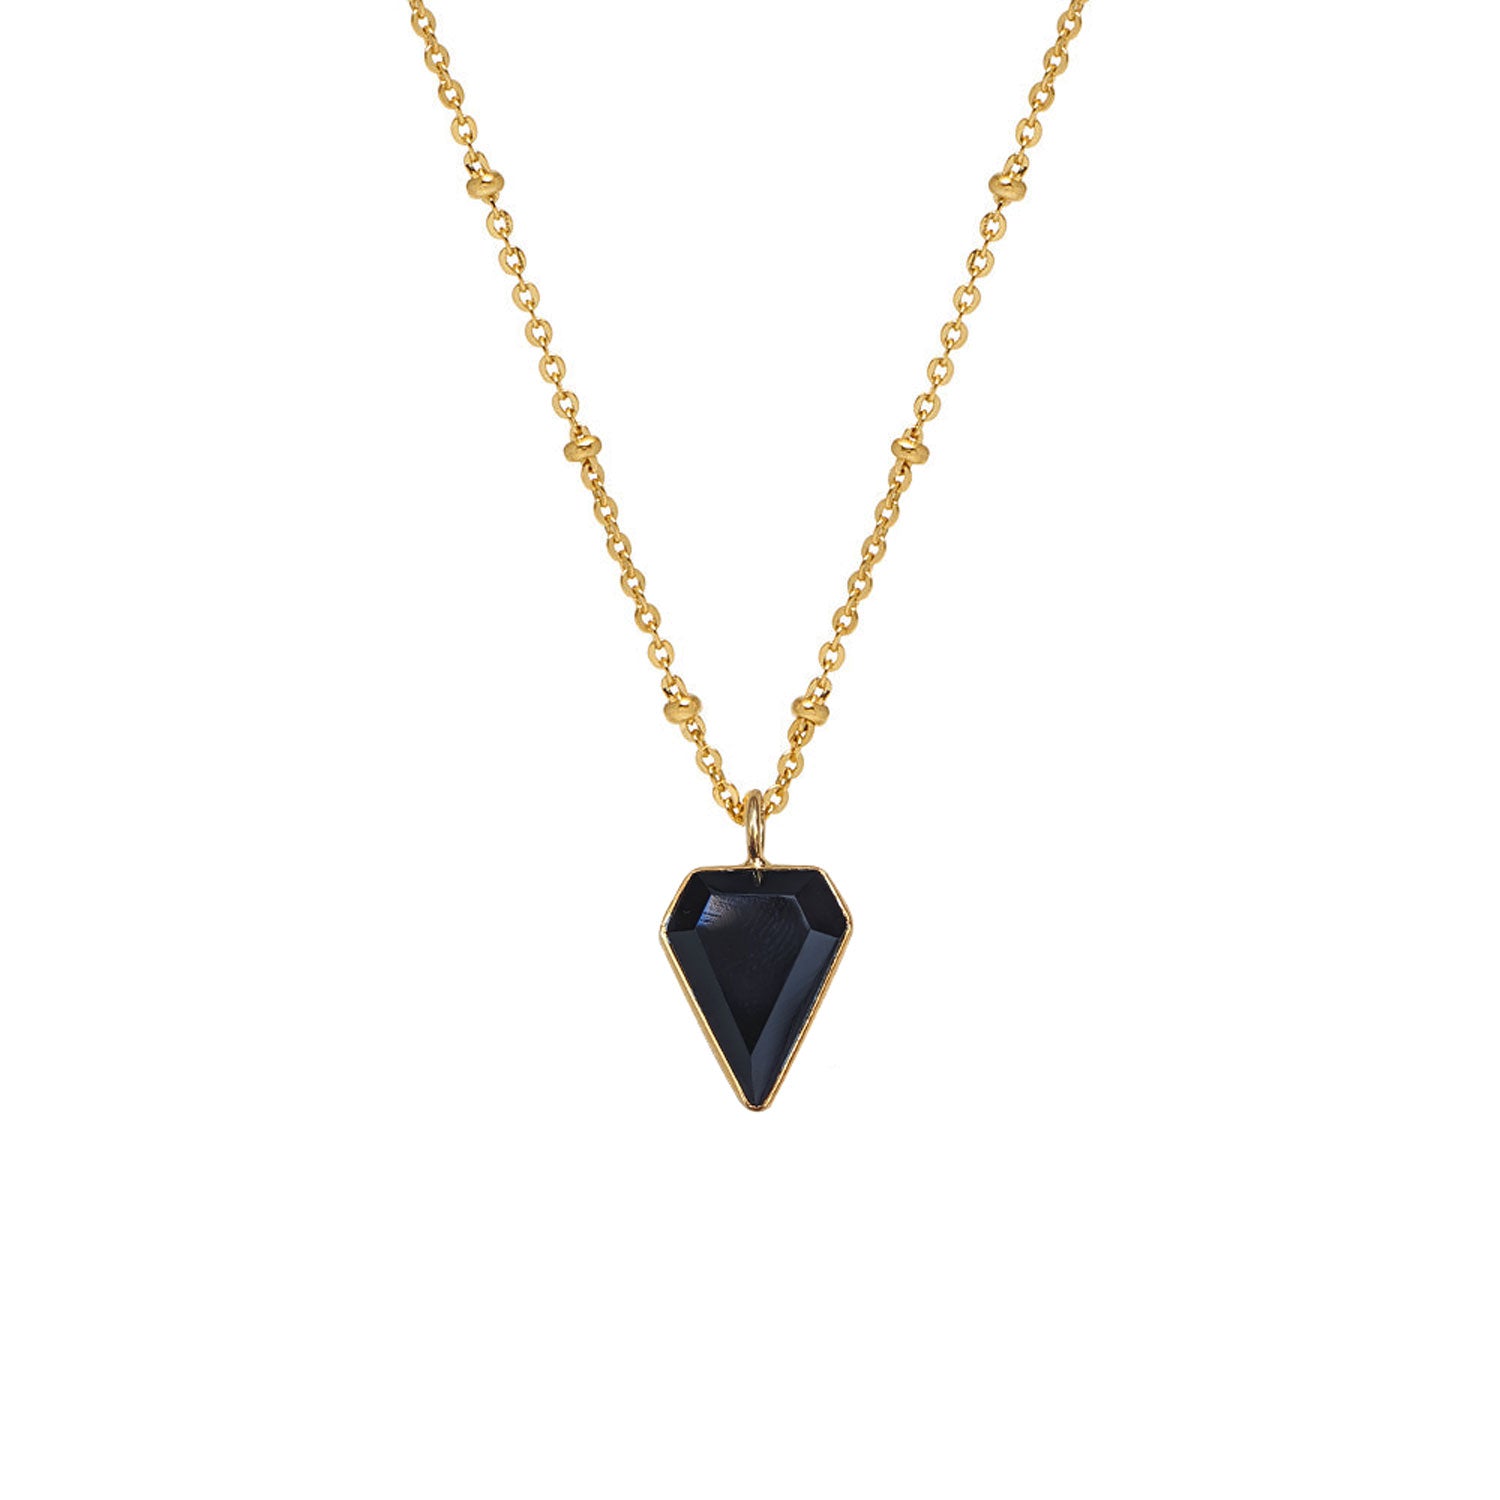 Faceted Black Onyx Diamond Pendant on Short Satellite chain